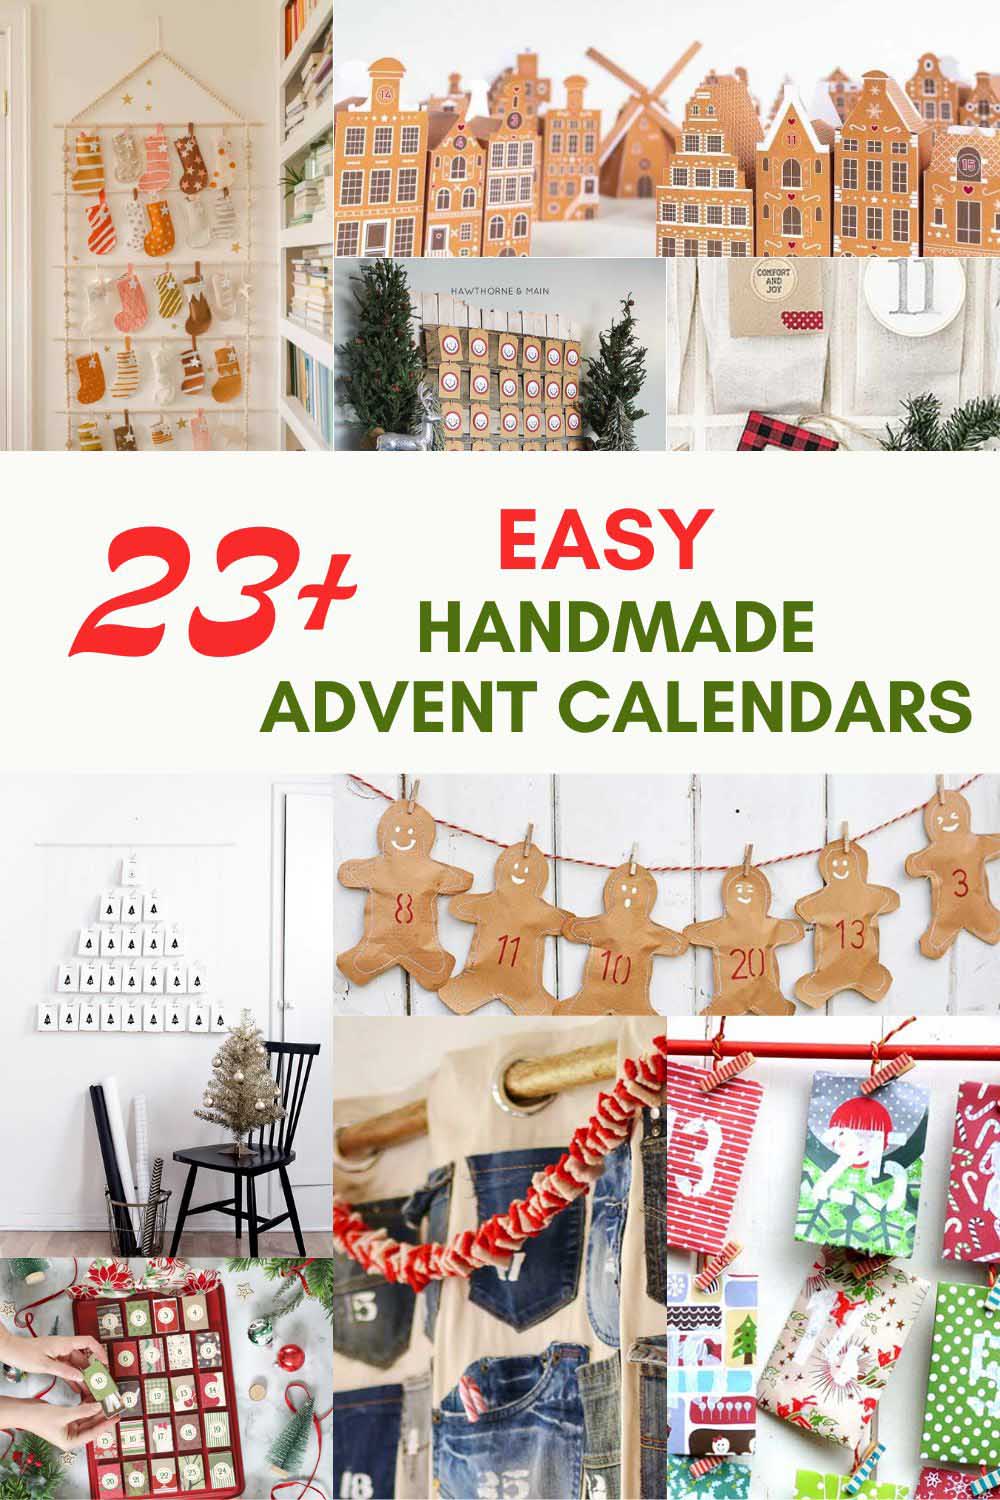 Handmade advent calendar ideas